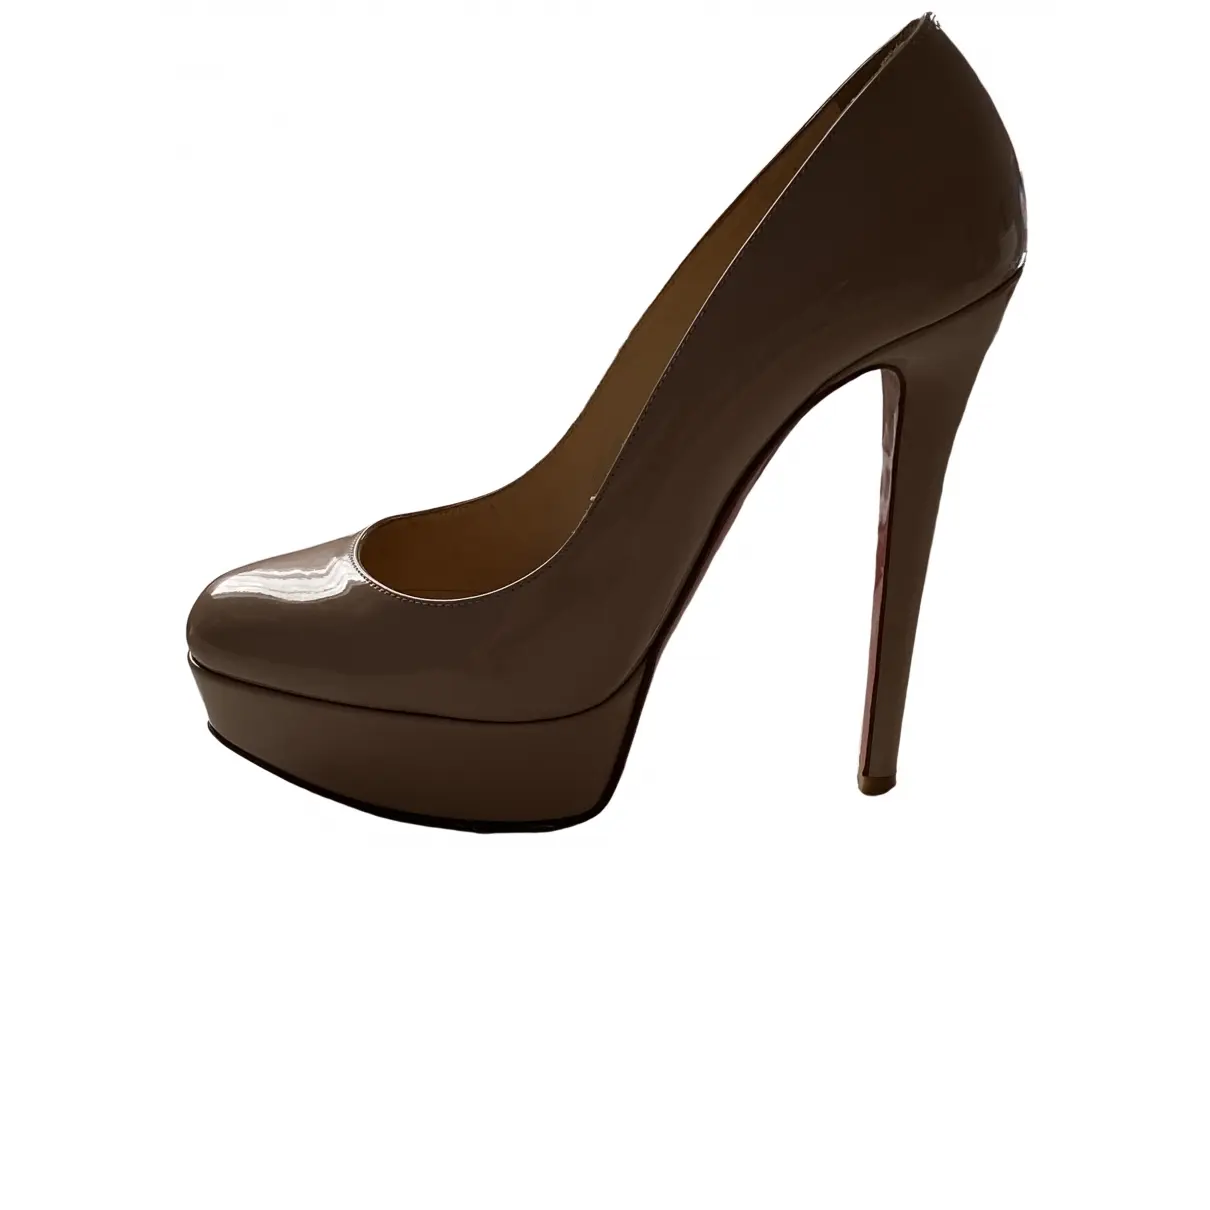 Bianca patent leather heels Christian Louboutin